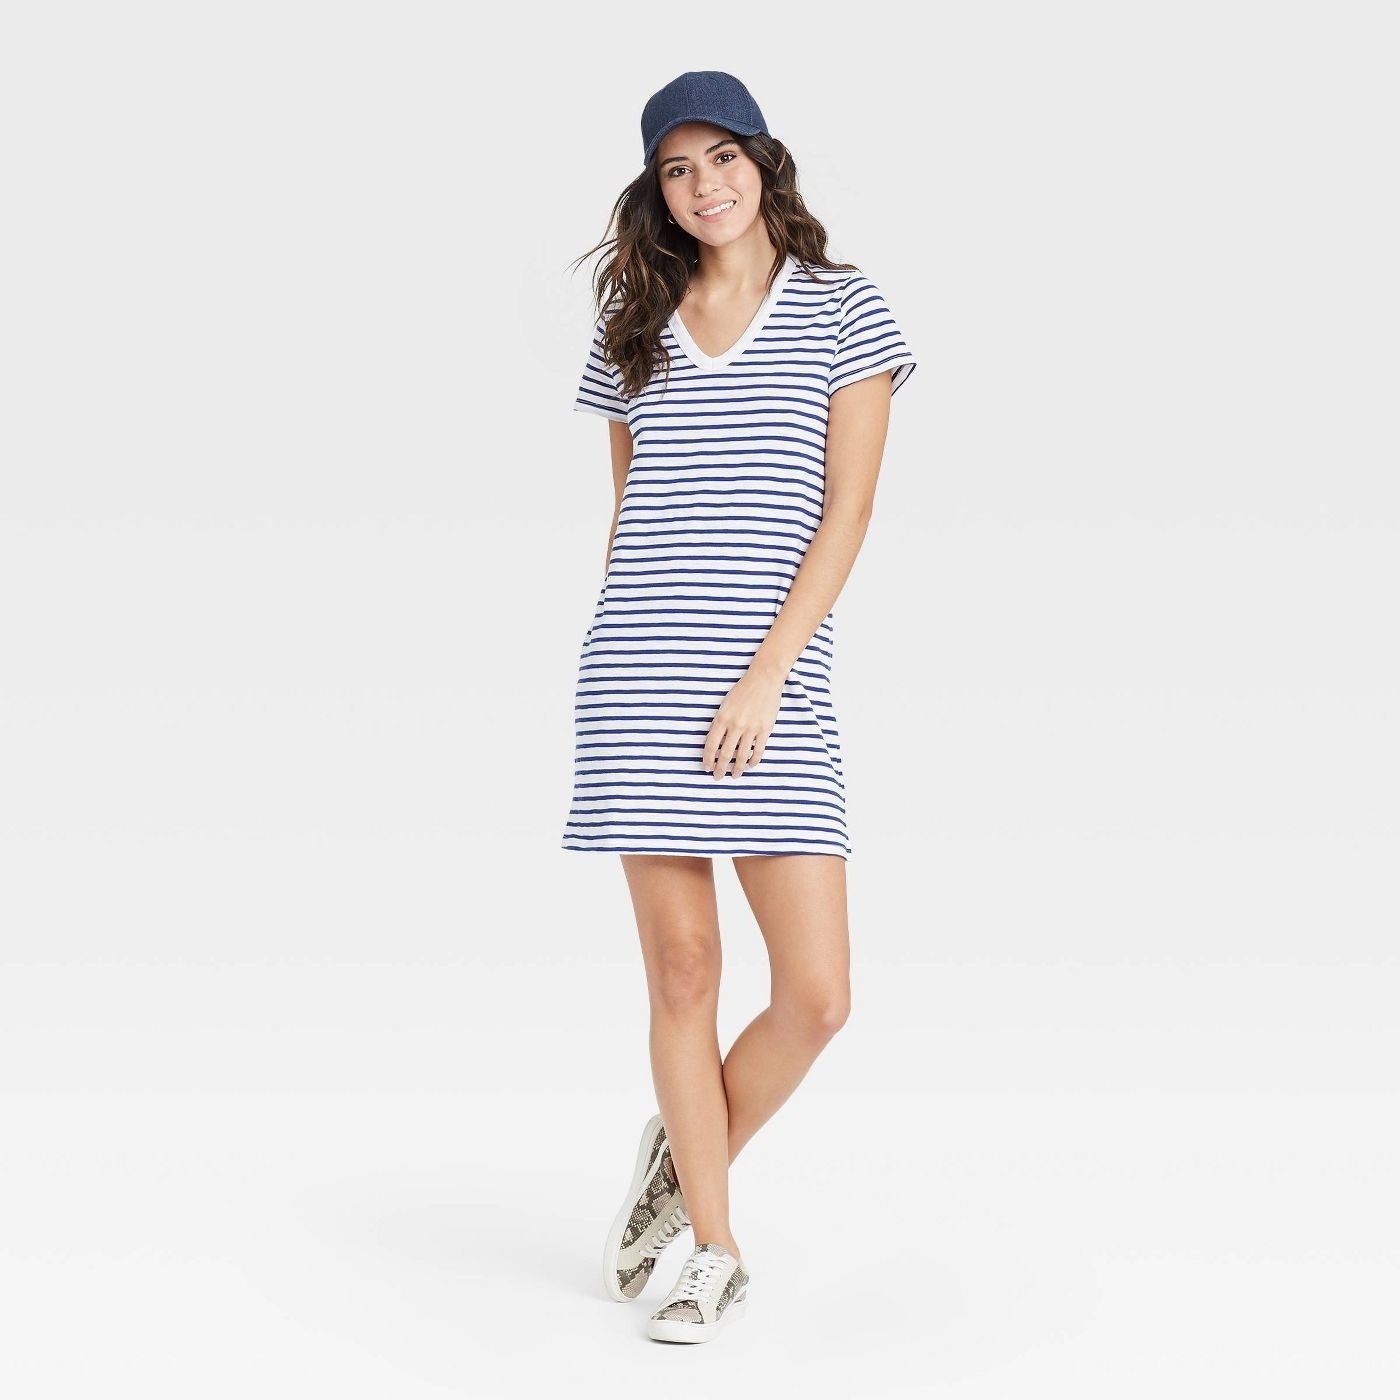 Model wearing the striped navy short-sleeve t-shirt dress